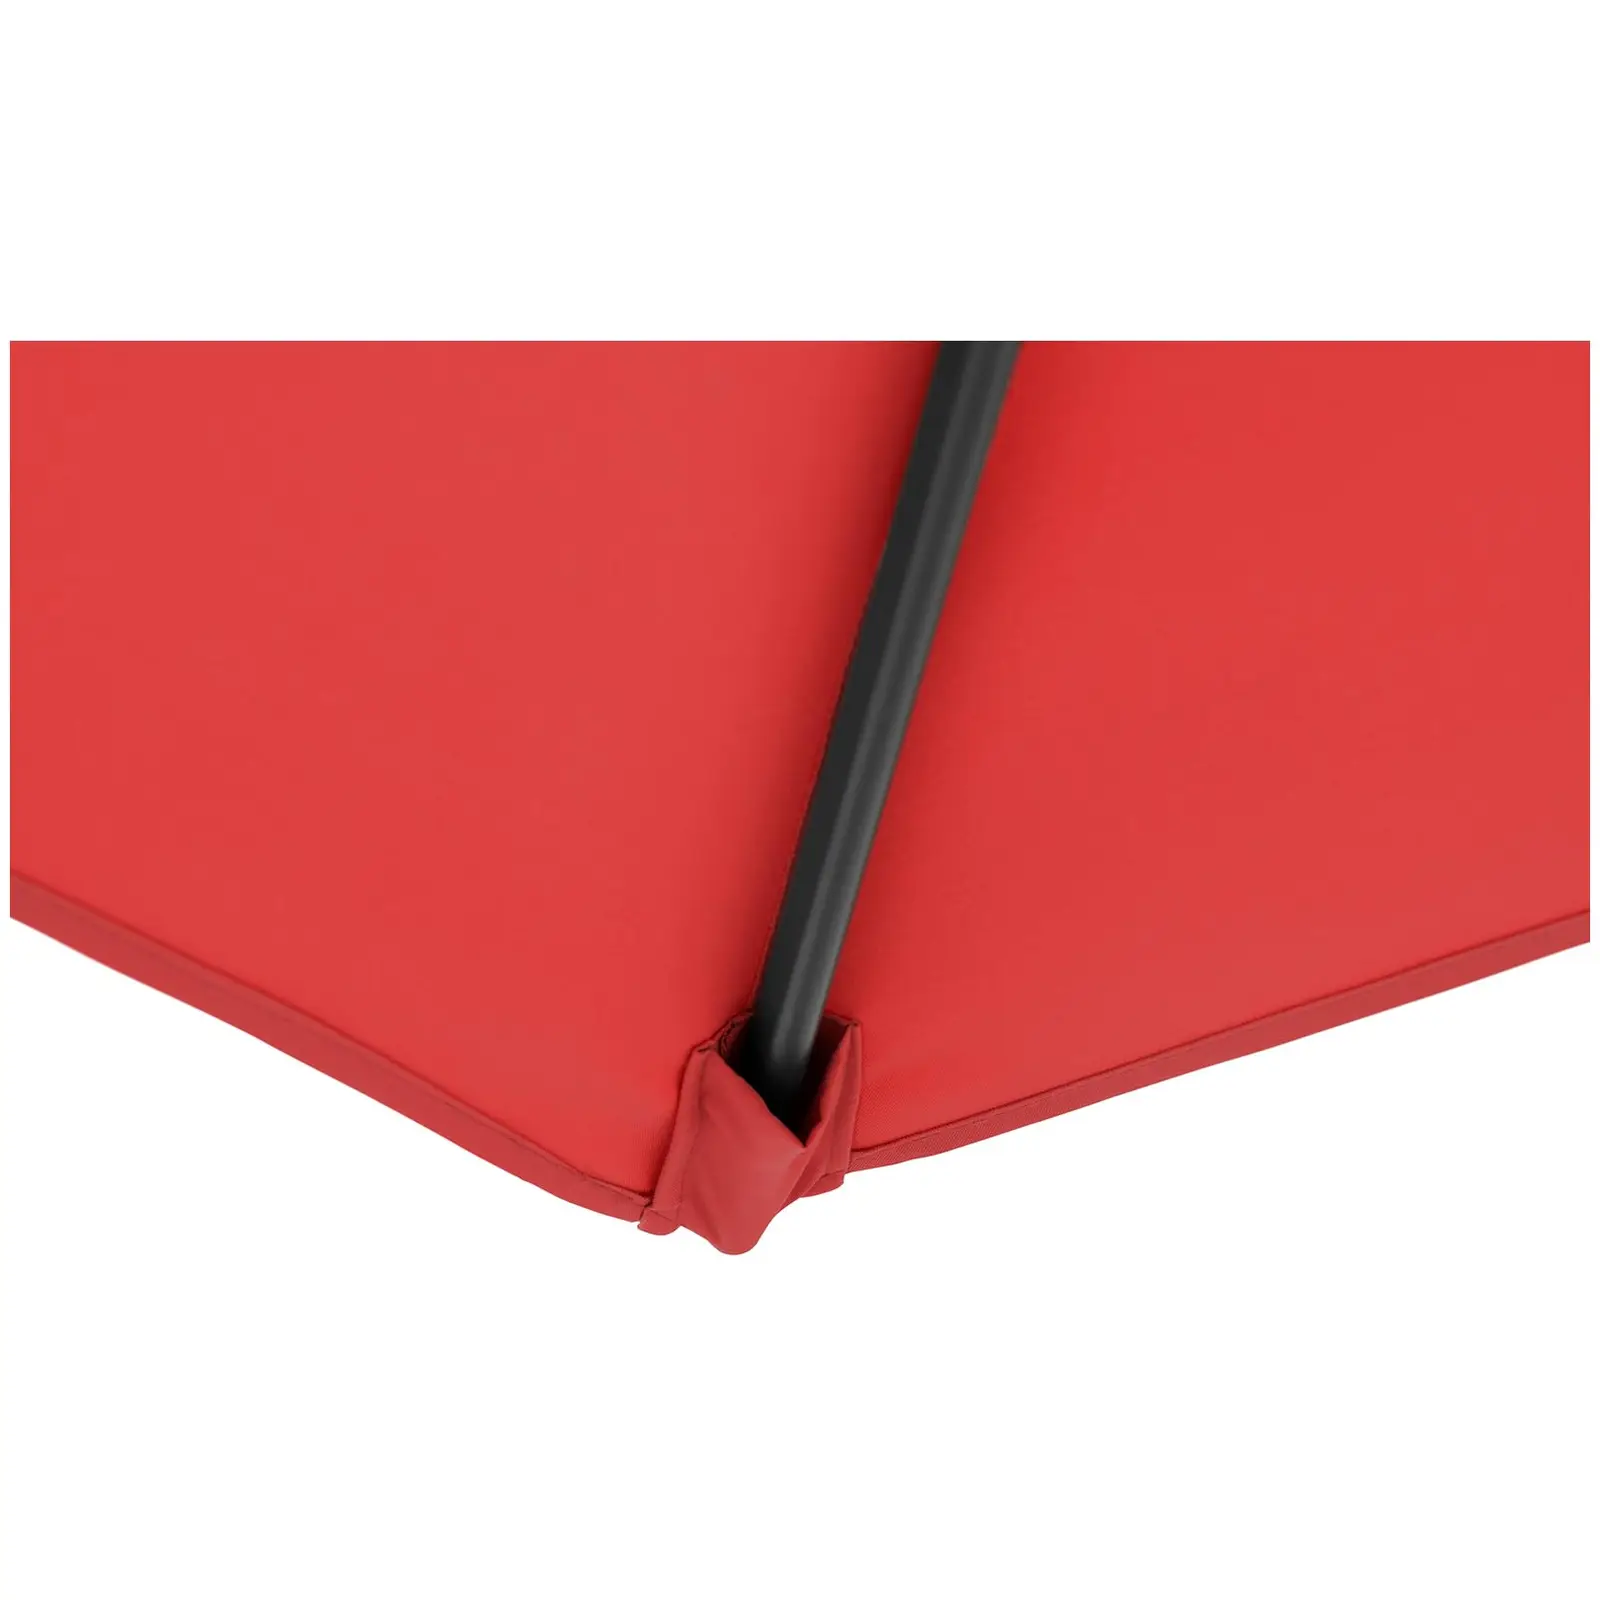 Sombrilla grande - roja - hexagonal - Ø 270 cm - inclinable